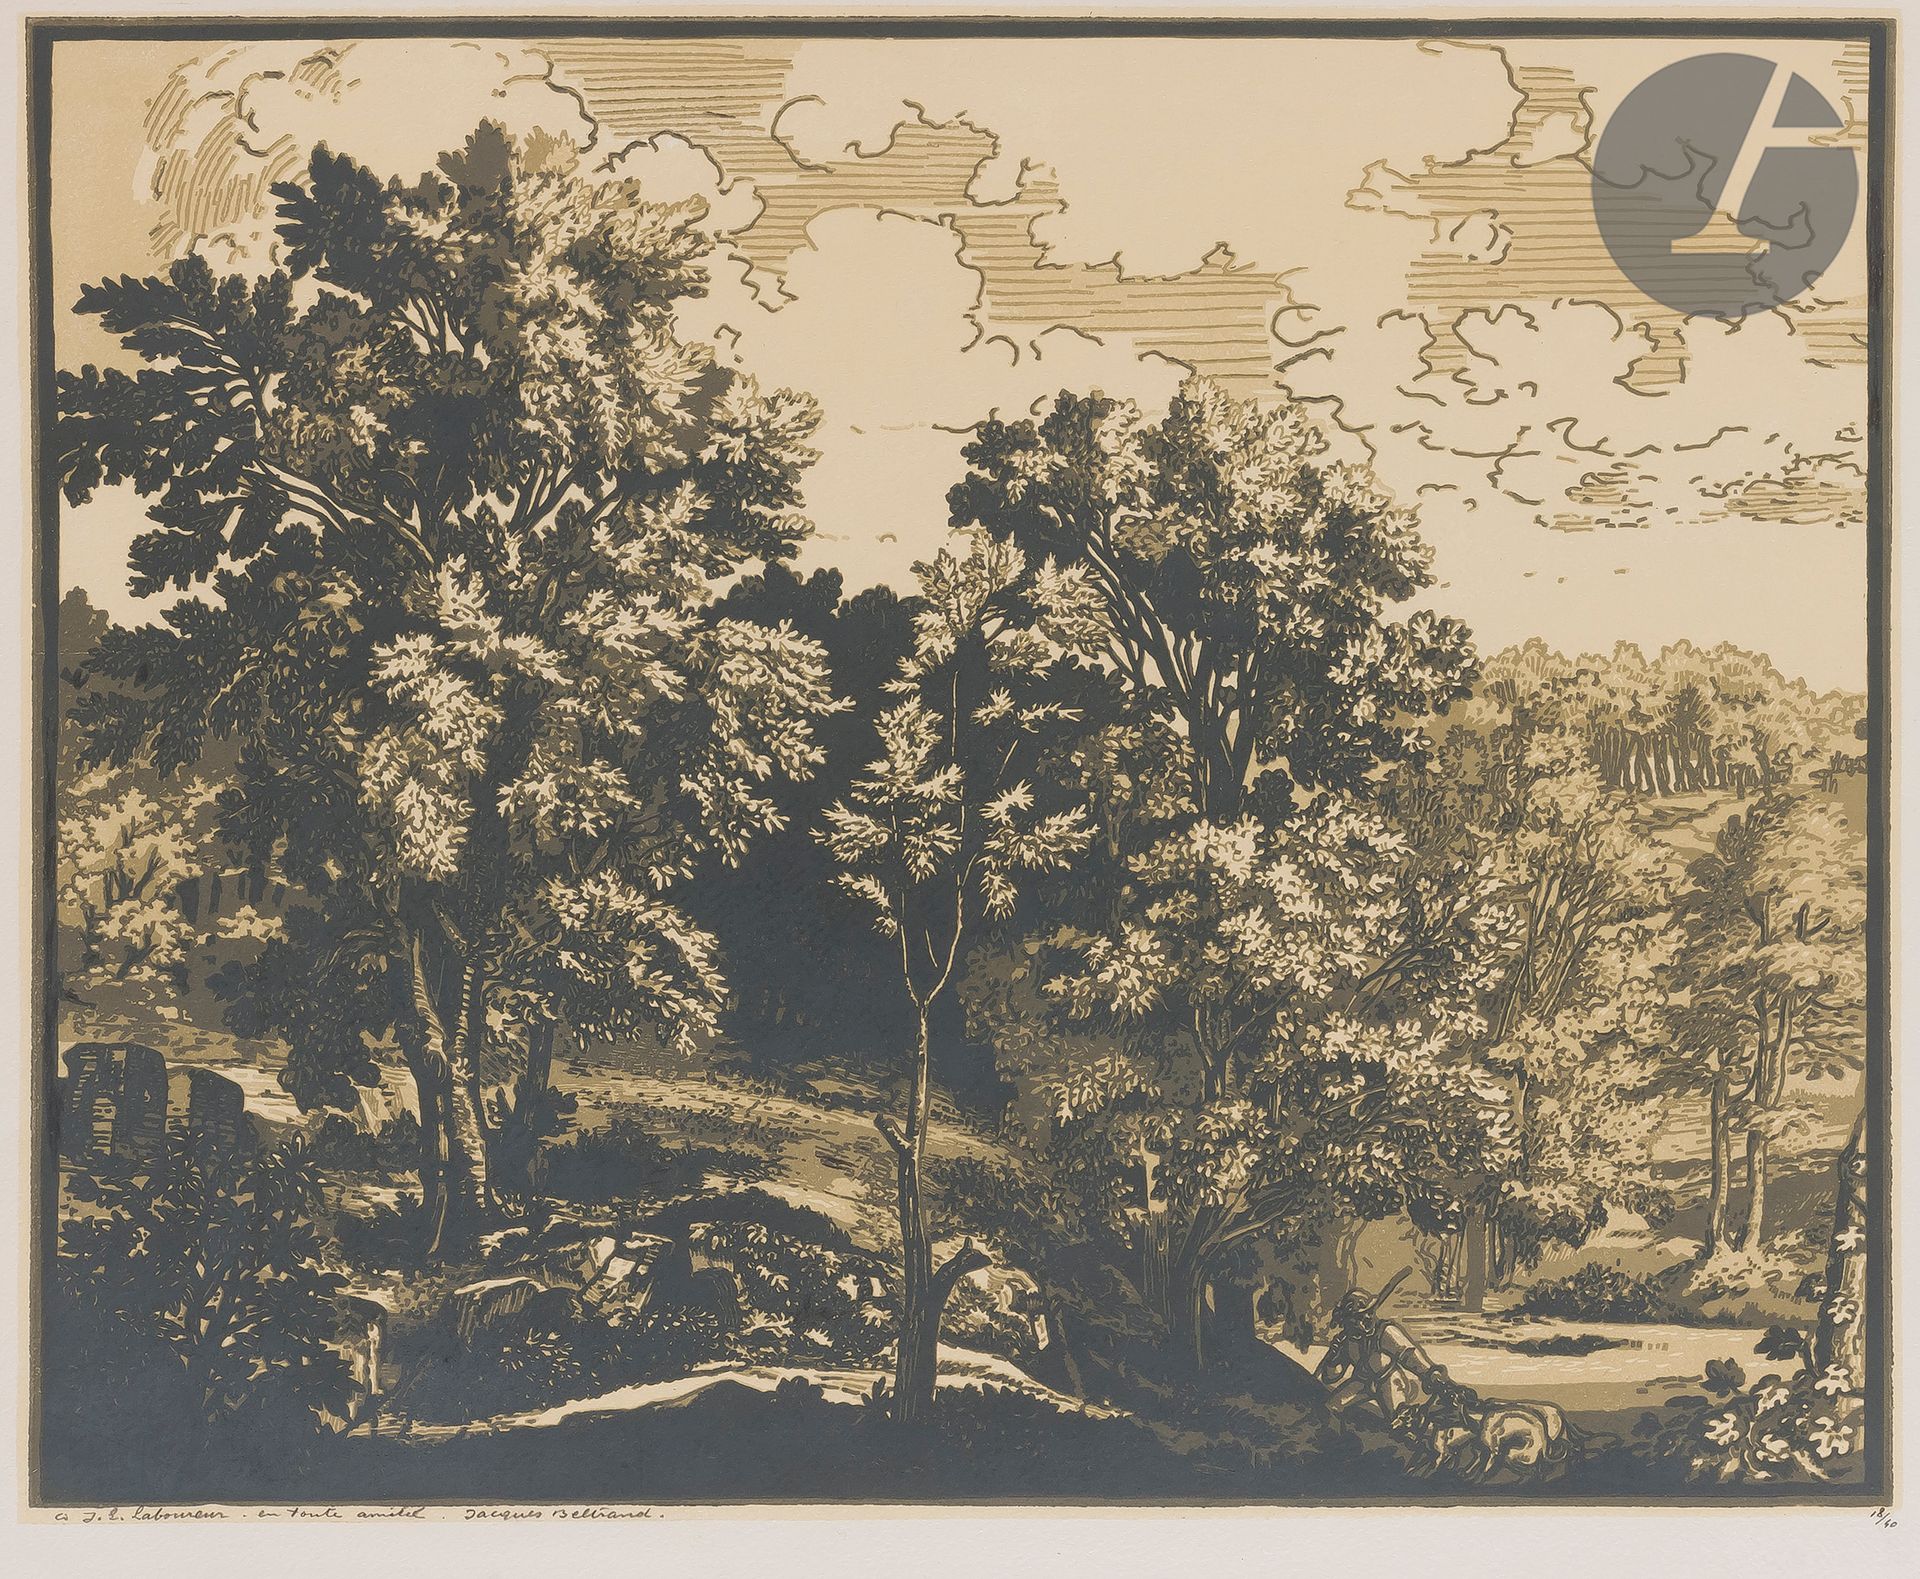 Null 雅克-贝尔特朗 (1874-1977)

狩猎现场。约1930年。木刻，410 x 340 mm。以彩色印刷。白色牛皮纸上的非常漂亮的样张，献给 "J&hellip;